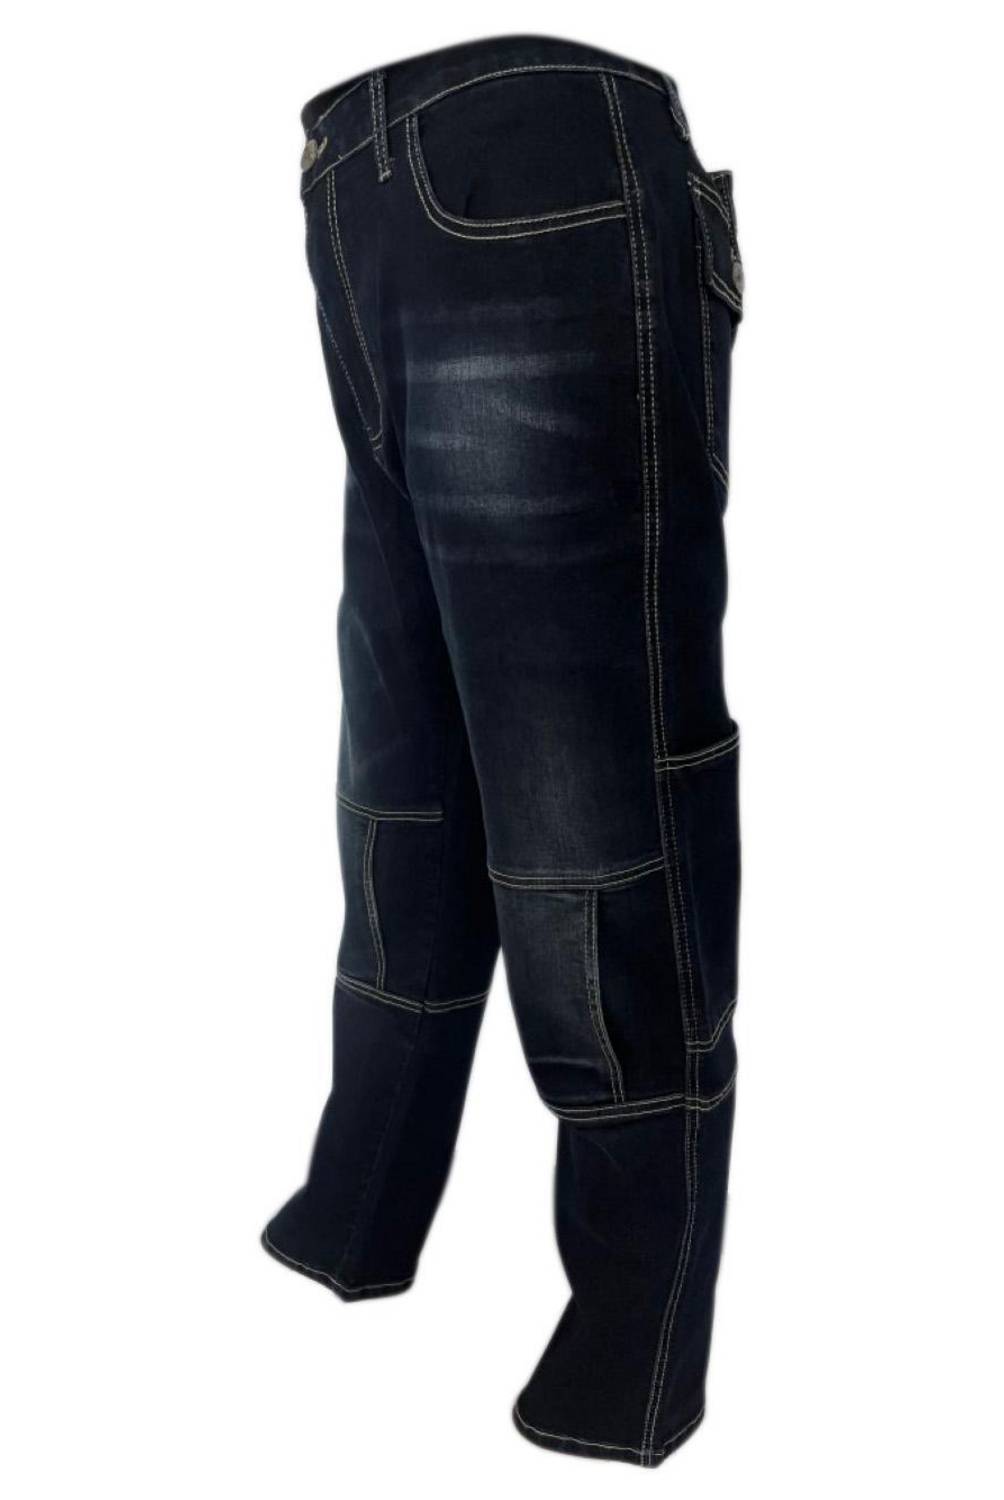 UBERMANN - Jeans de trabajo talla XL